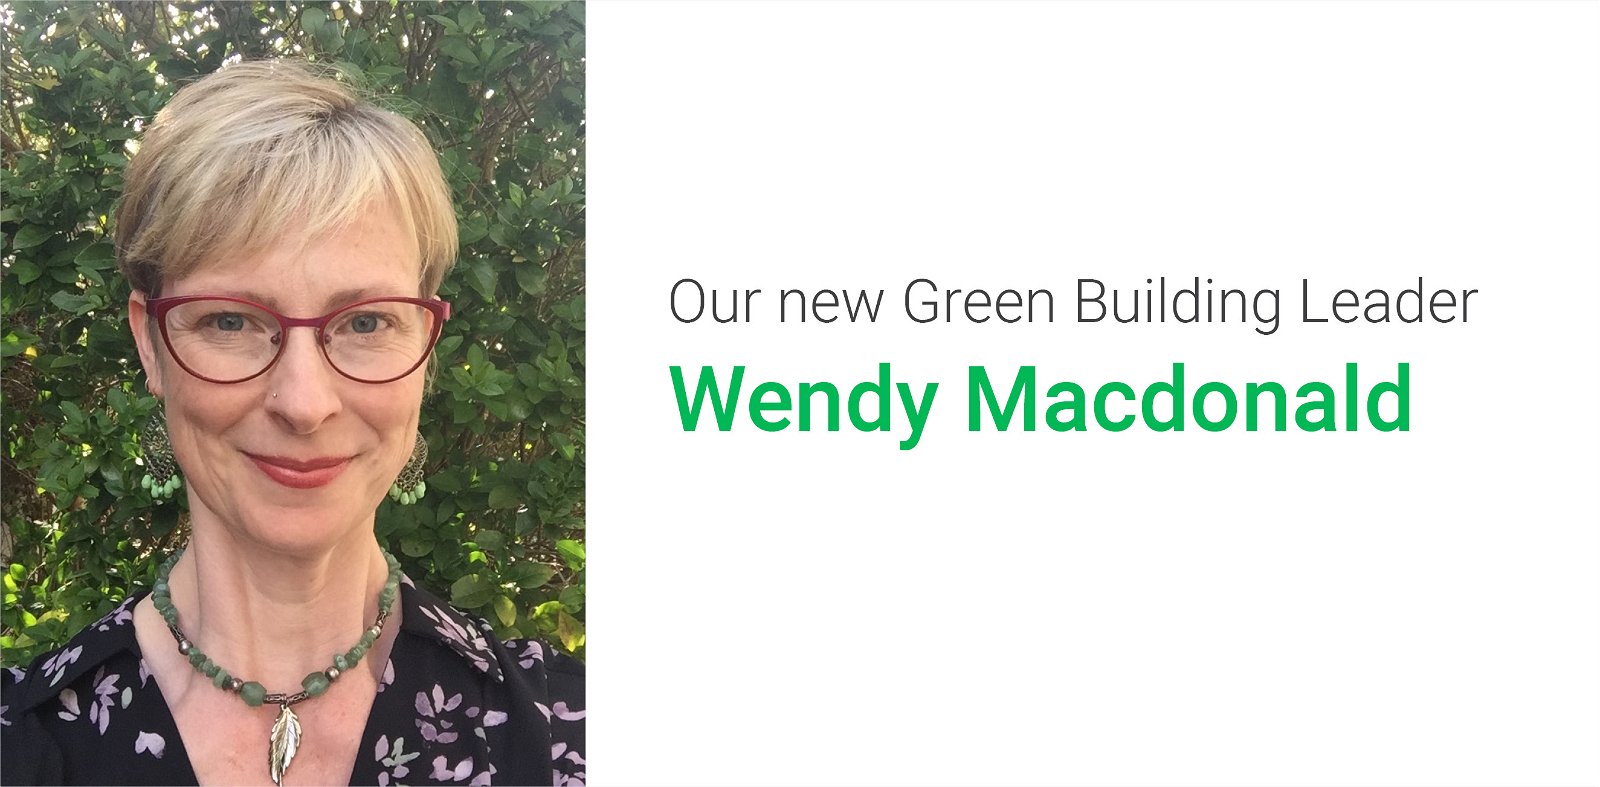 Green Building Leader Wendy Macdonald Joins RJC Engineers